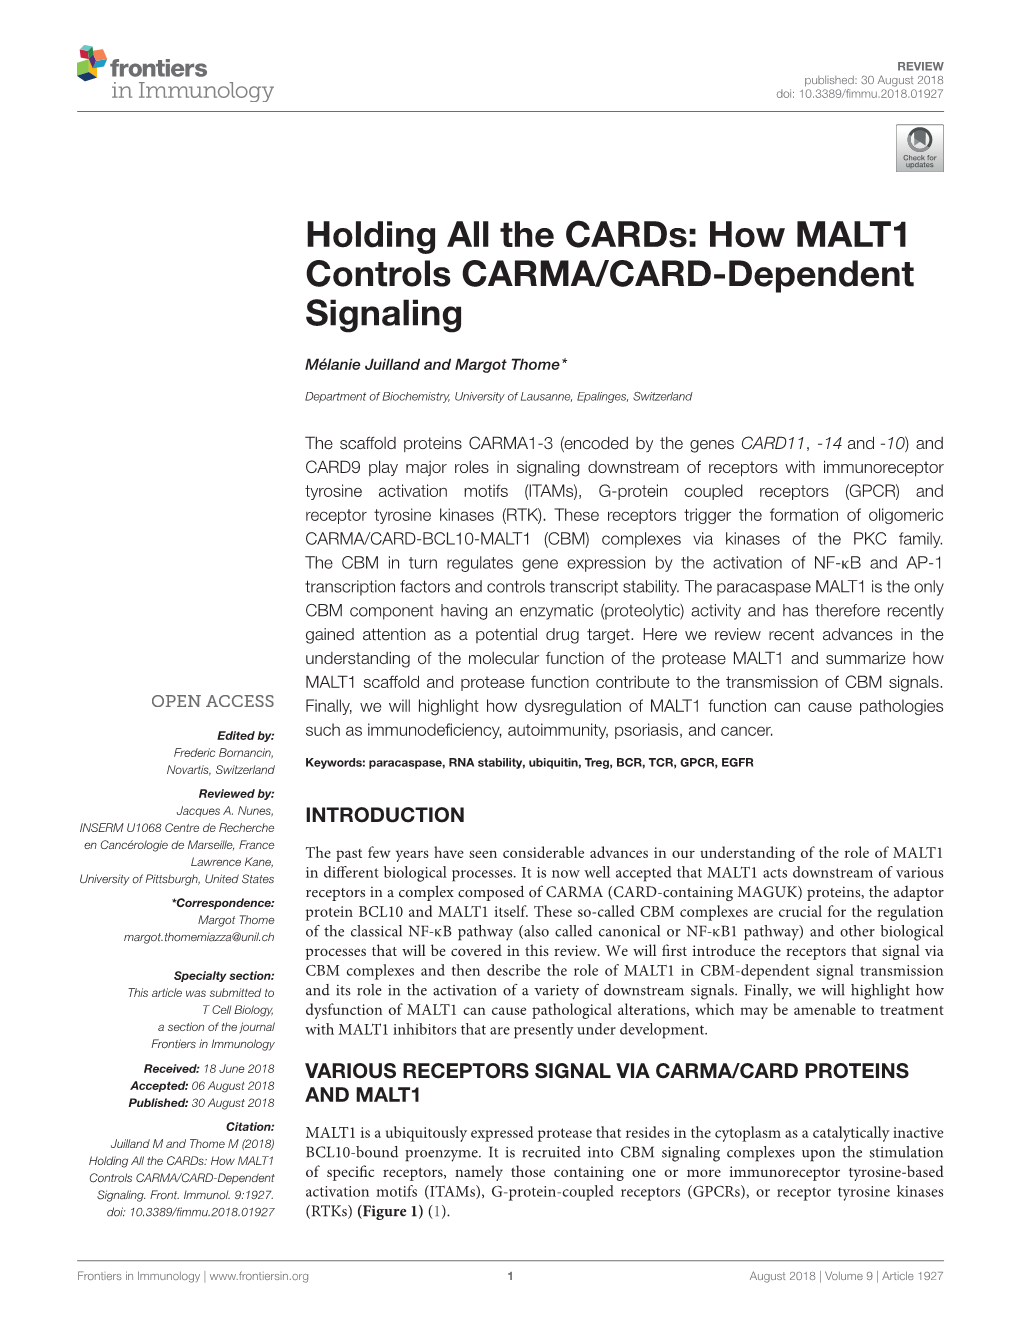 How MALT1 Controls CARMA/CARD-Dependent Signaling